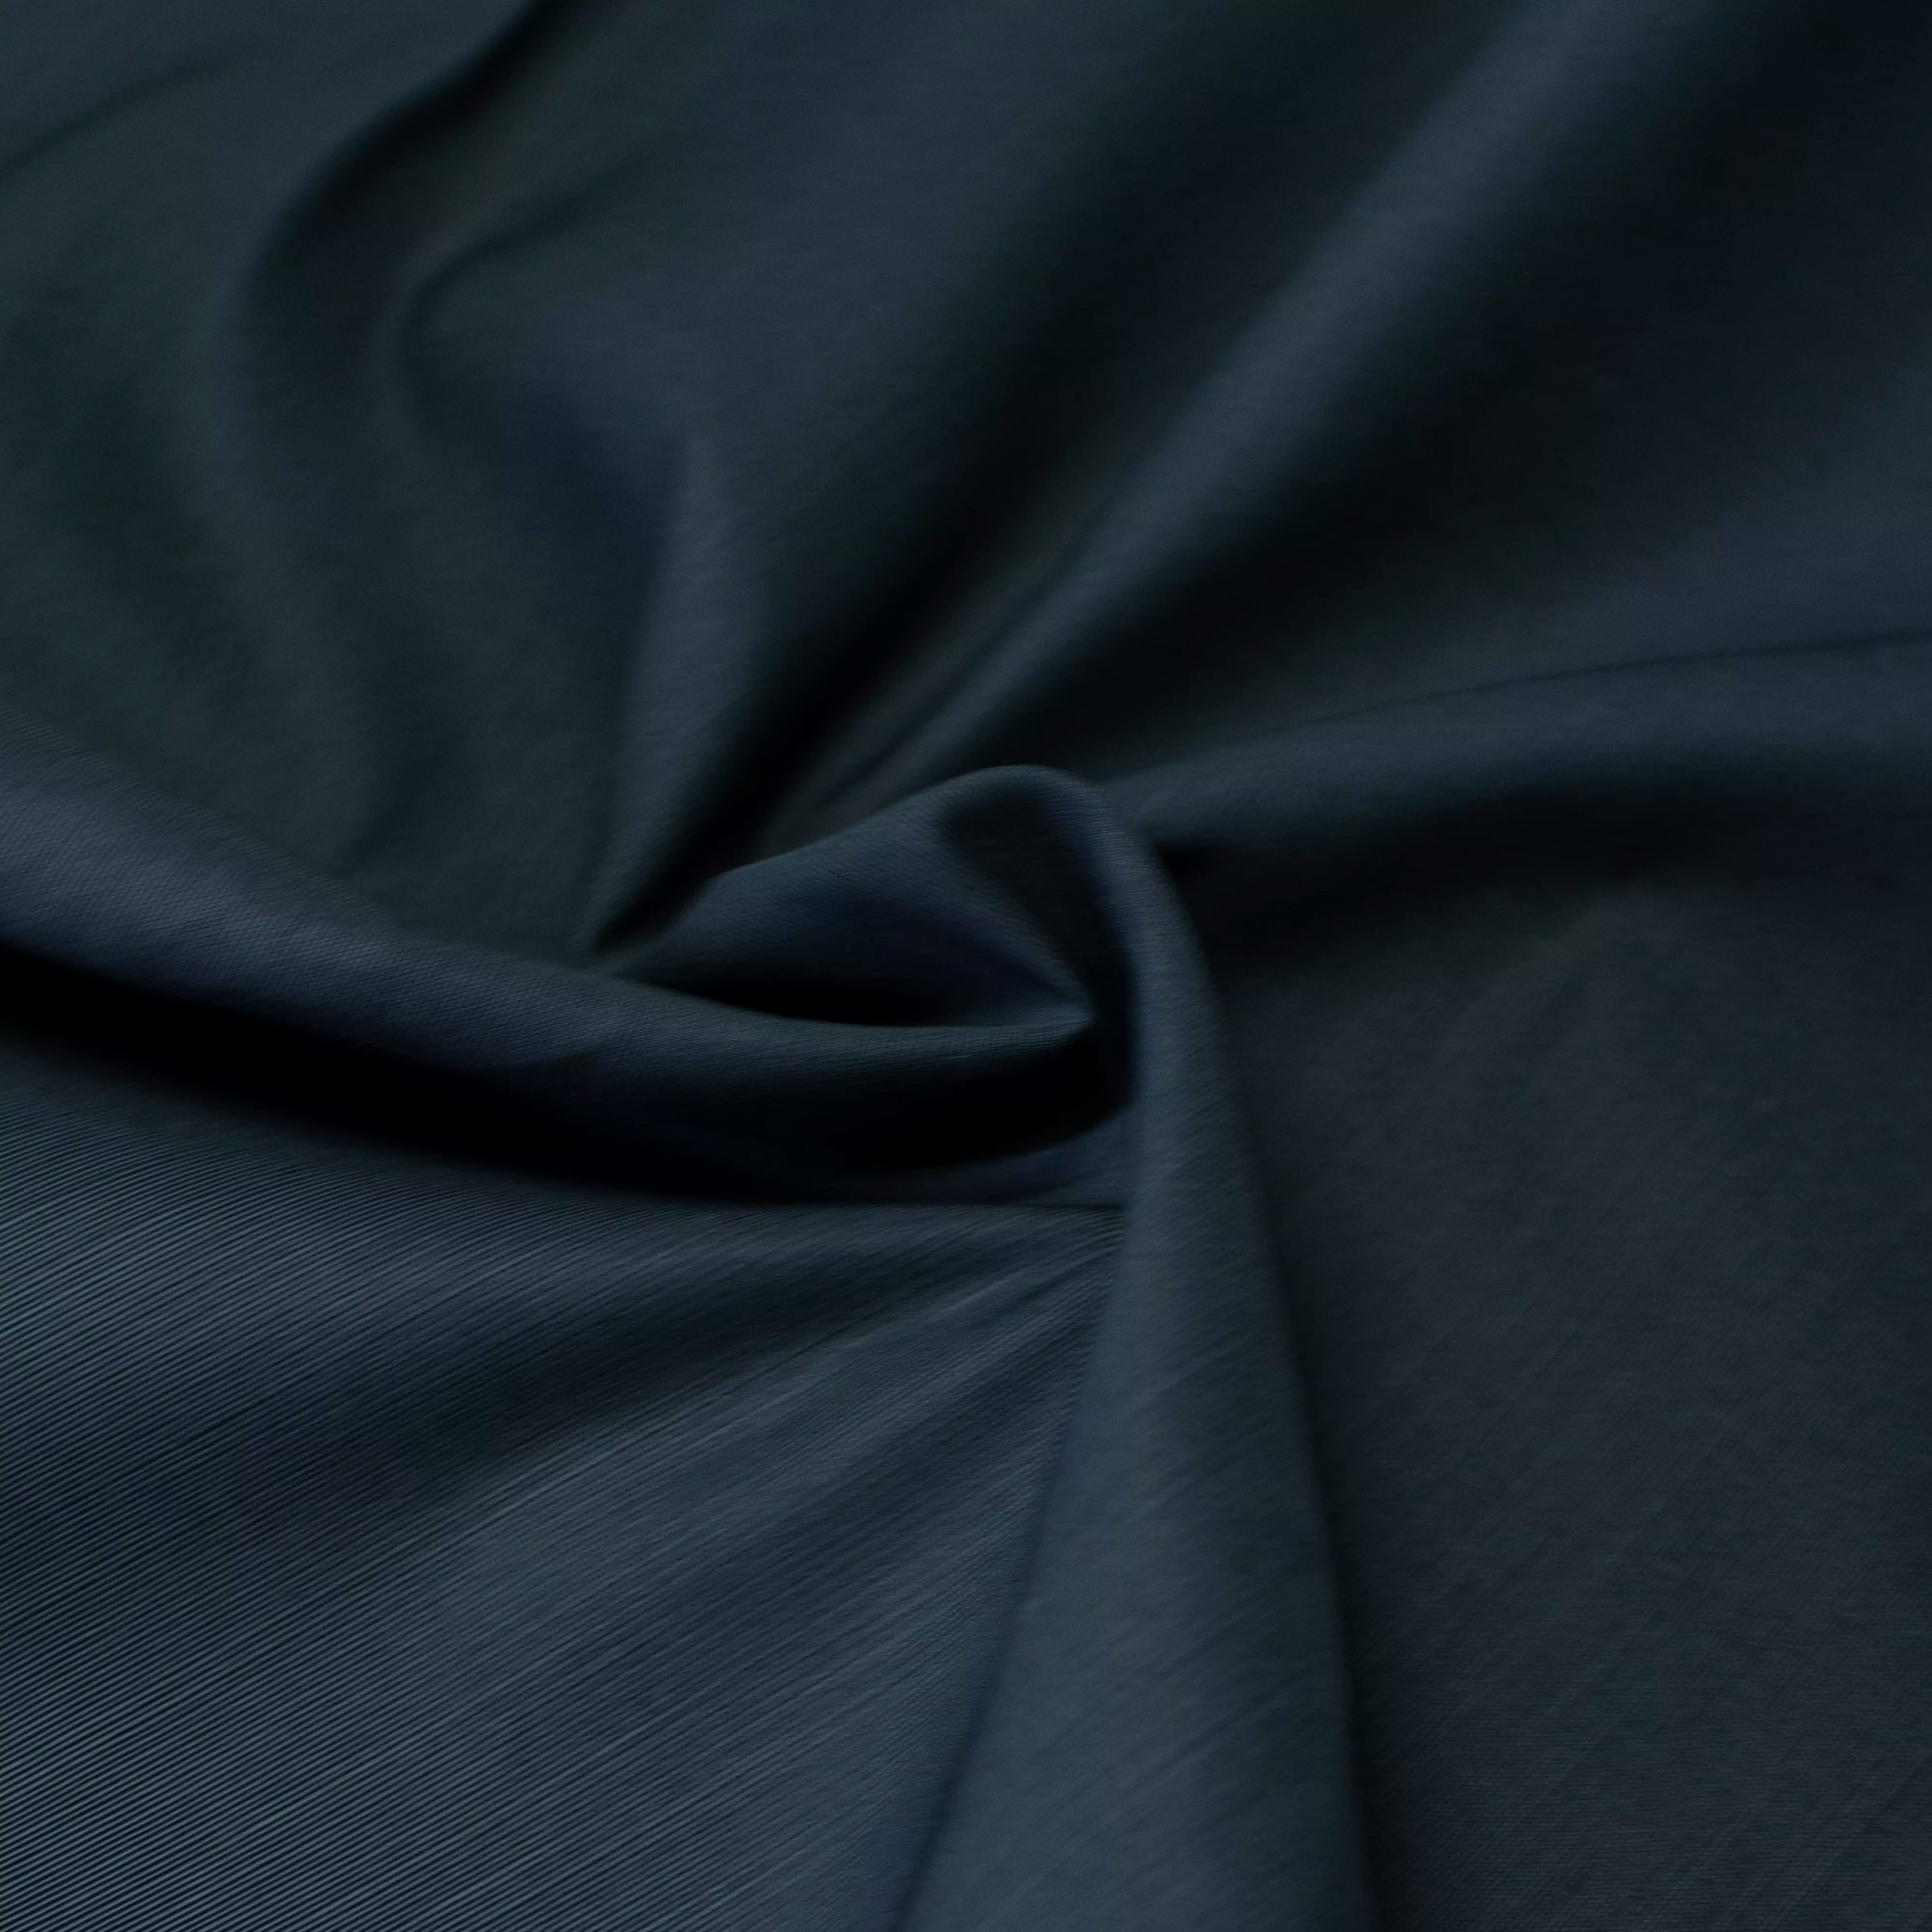 Baumwolle - Ripsgewebe - dunkles Nachtblau